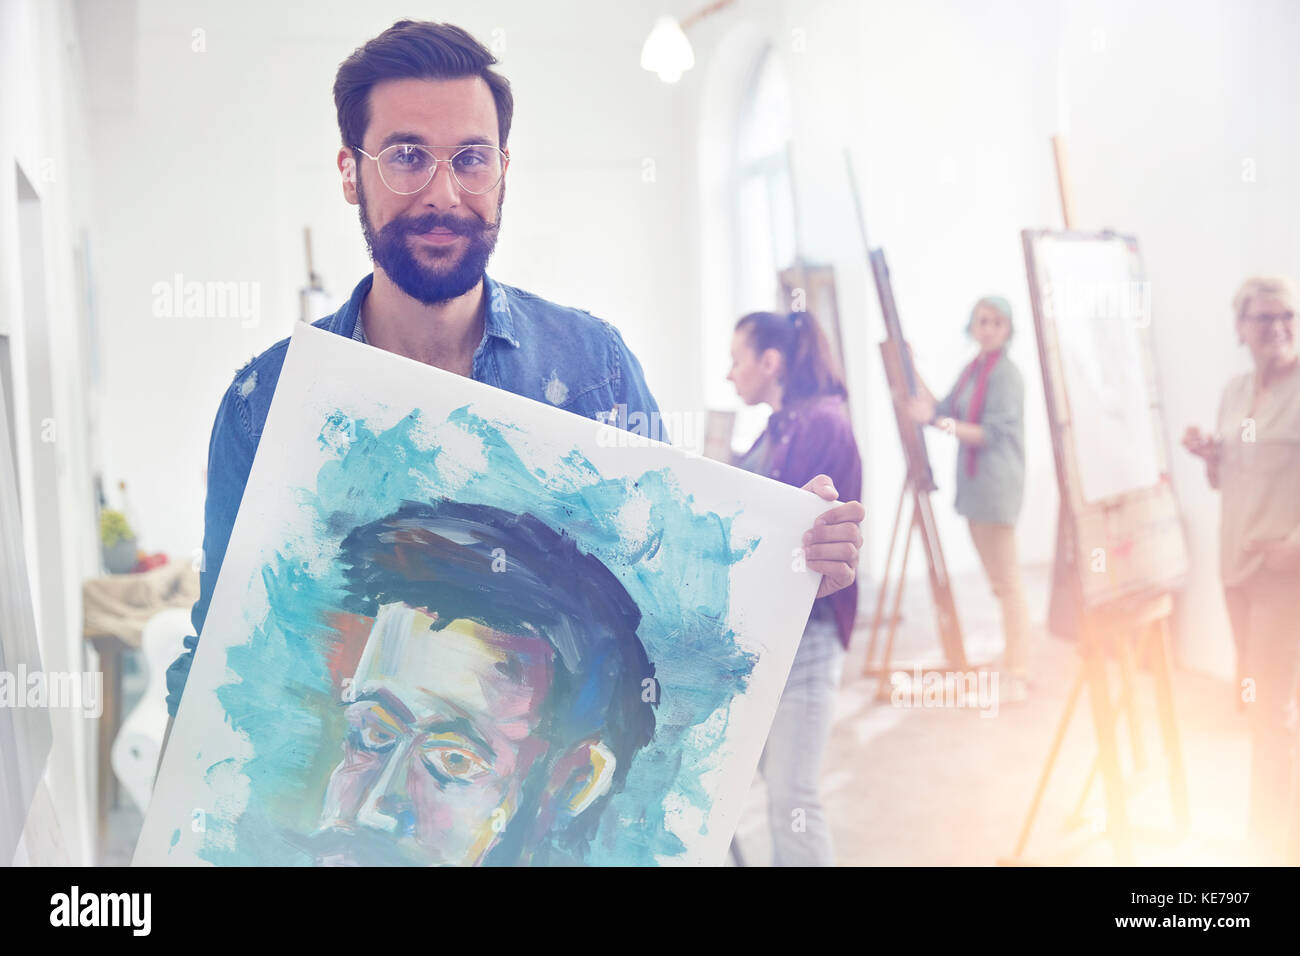 Portrait smiling, confident, proud male artist holding painting in art class studio Stock Photo